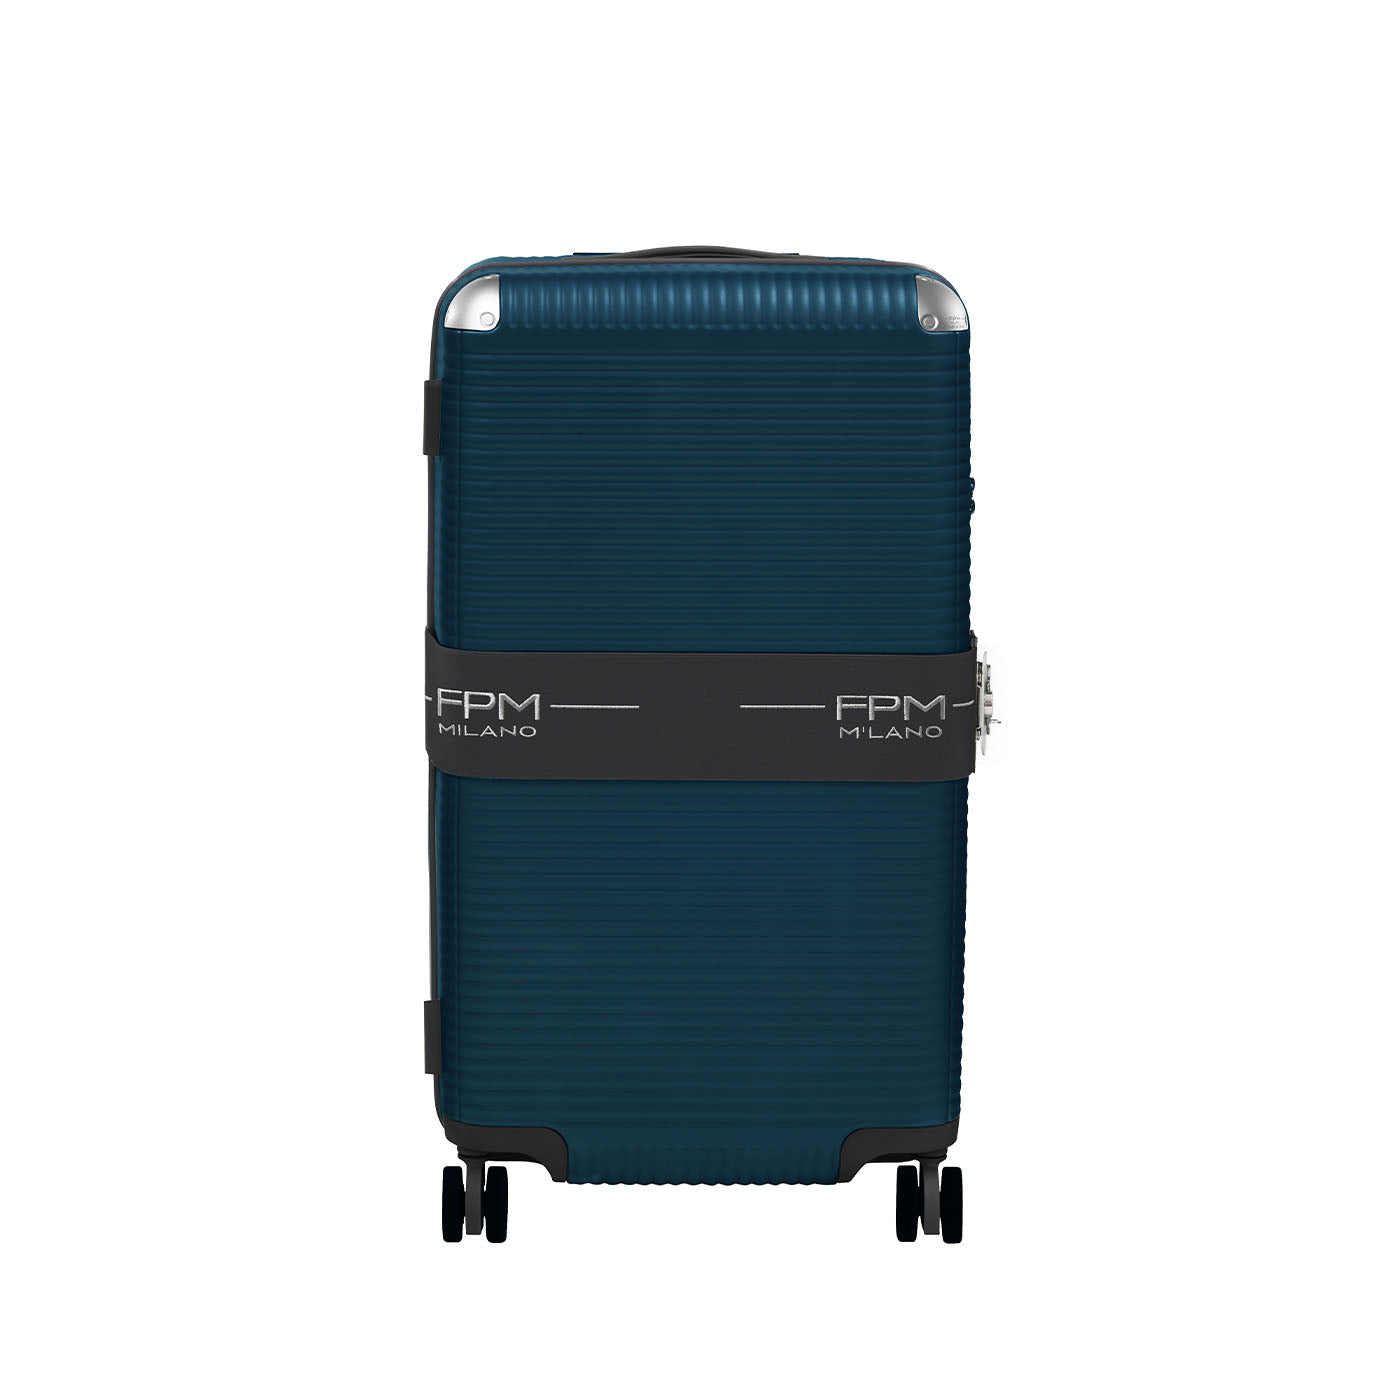 Bank Zip Deluxe Blue On Wheels Medium Luggage - Alternative view 2